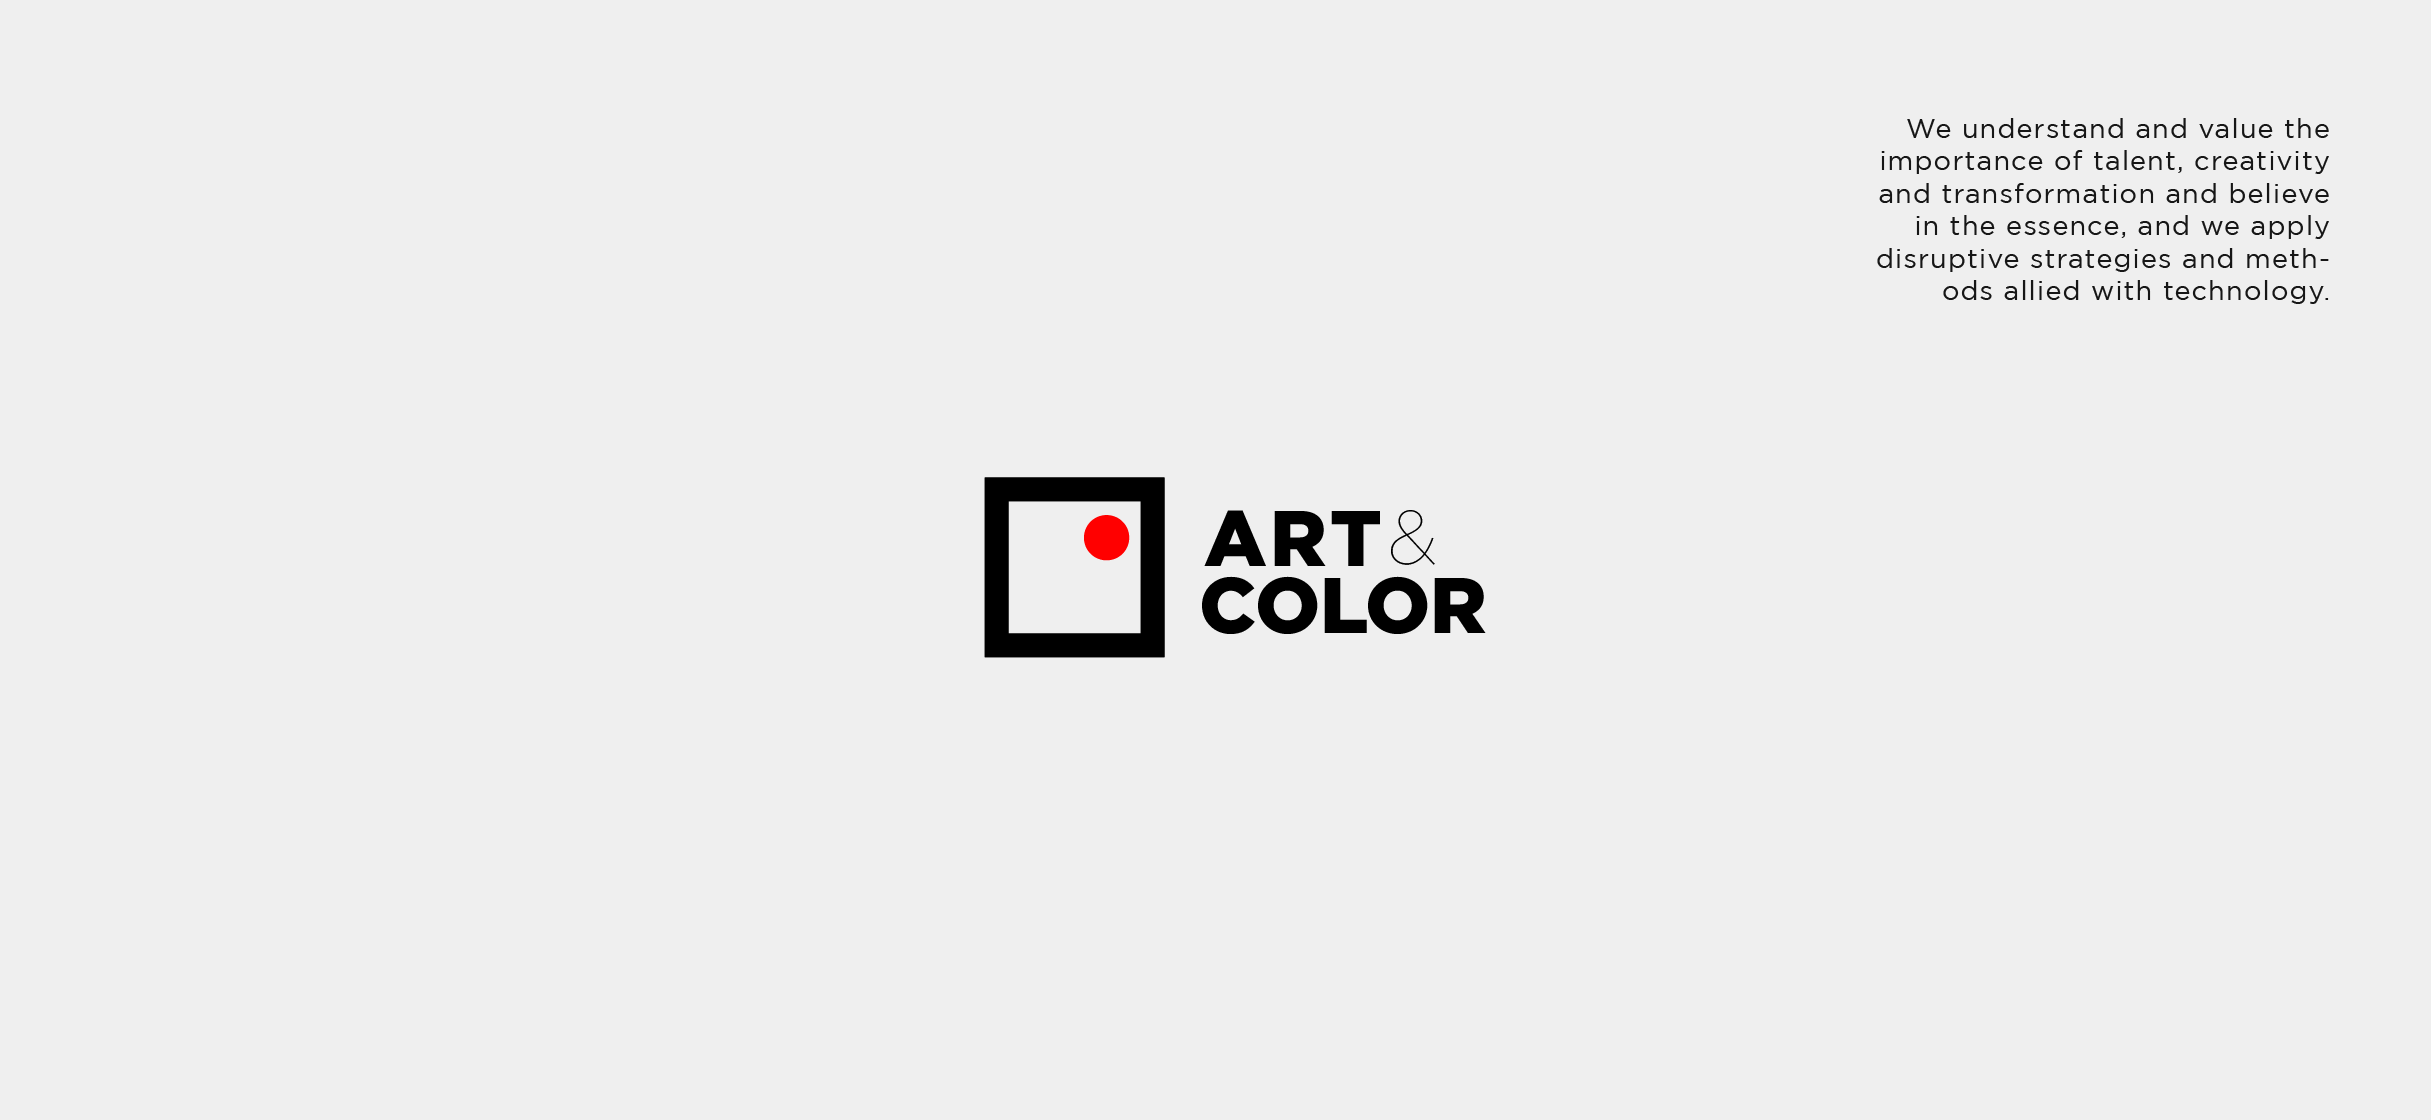 Art & Color Marketing Branding